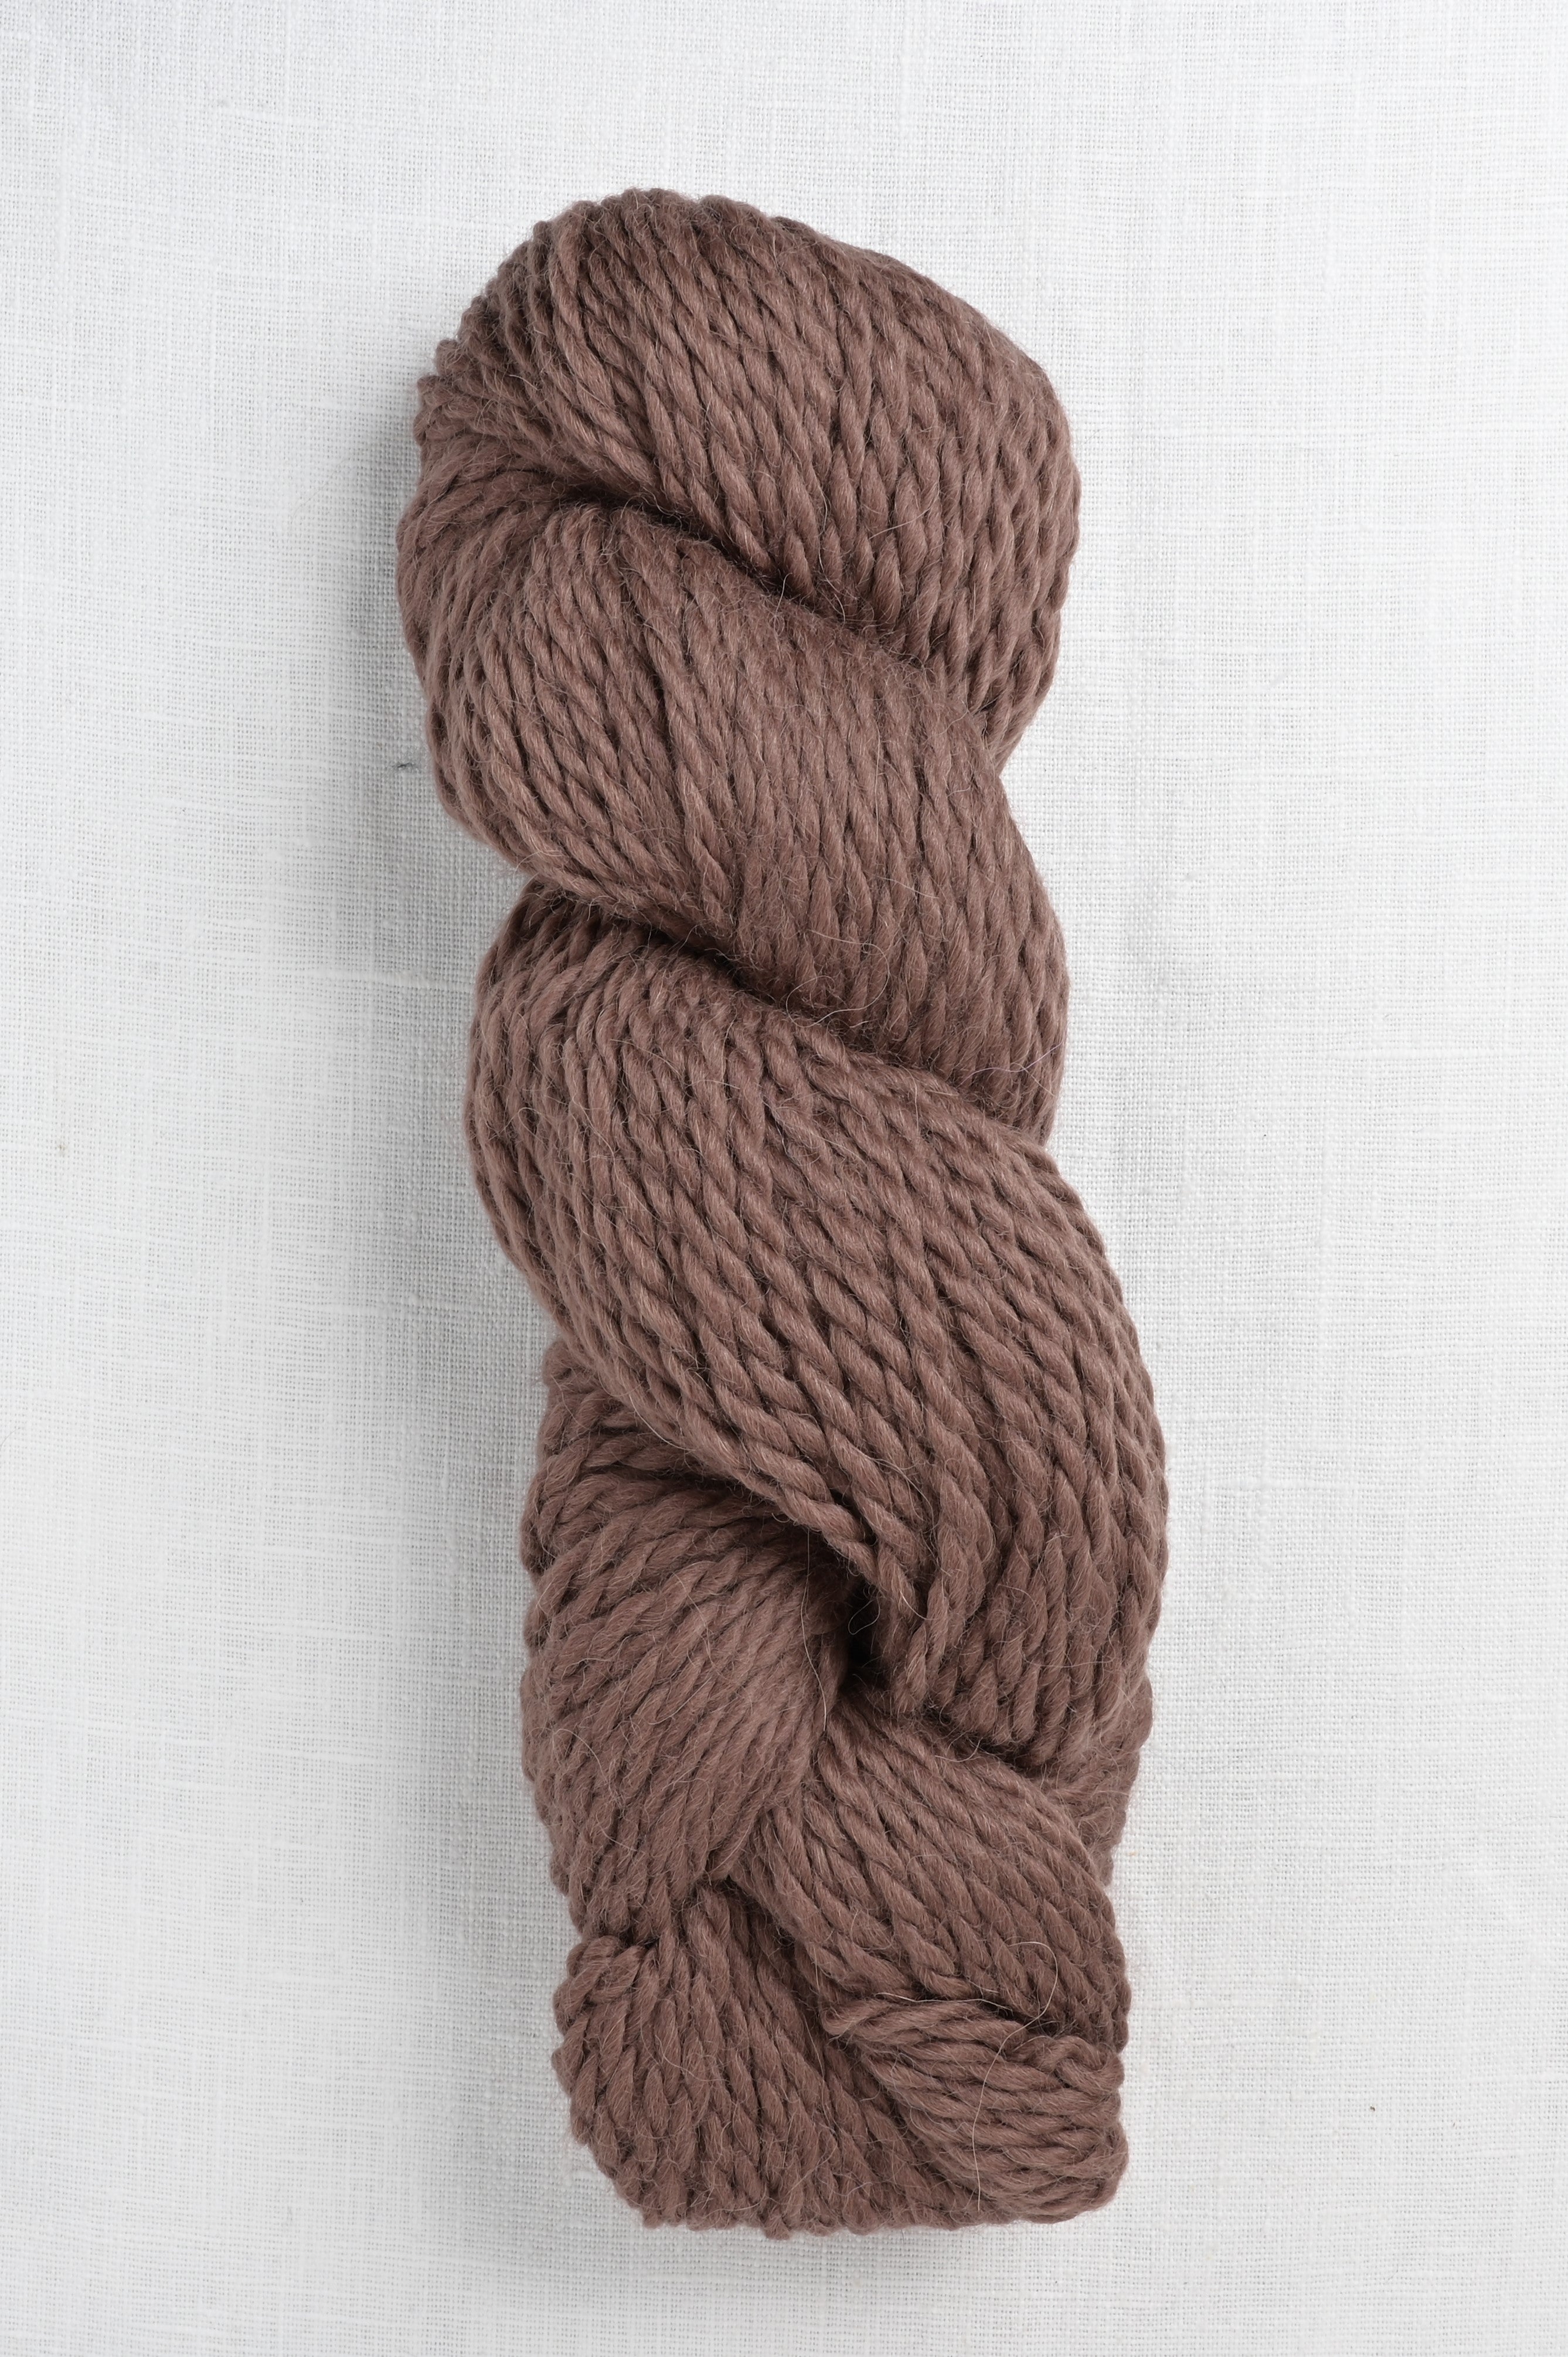 Cascade Yarn - Baby Alpaca Chunky - Acorn 667